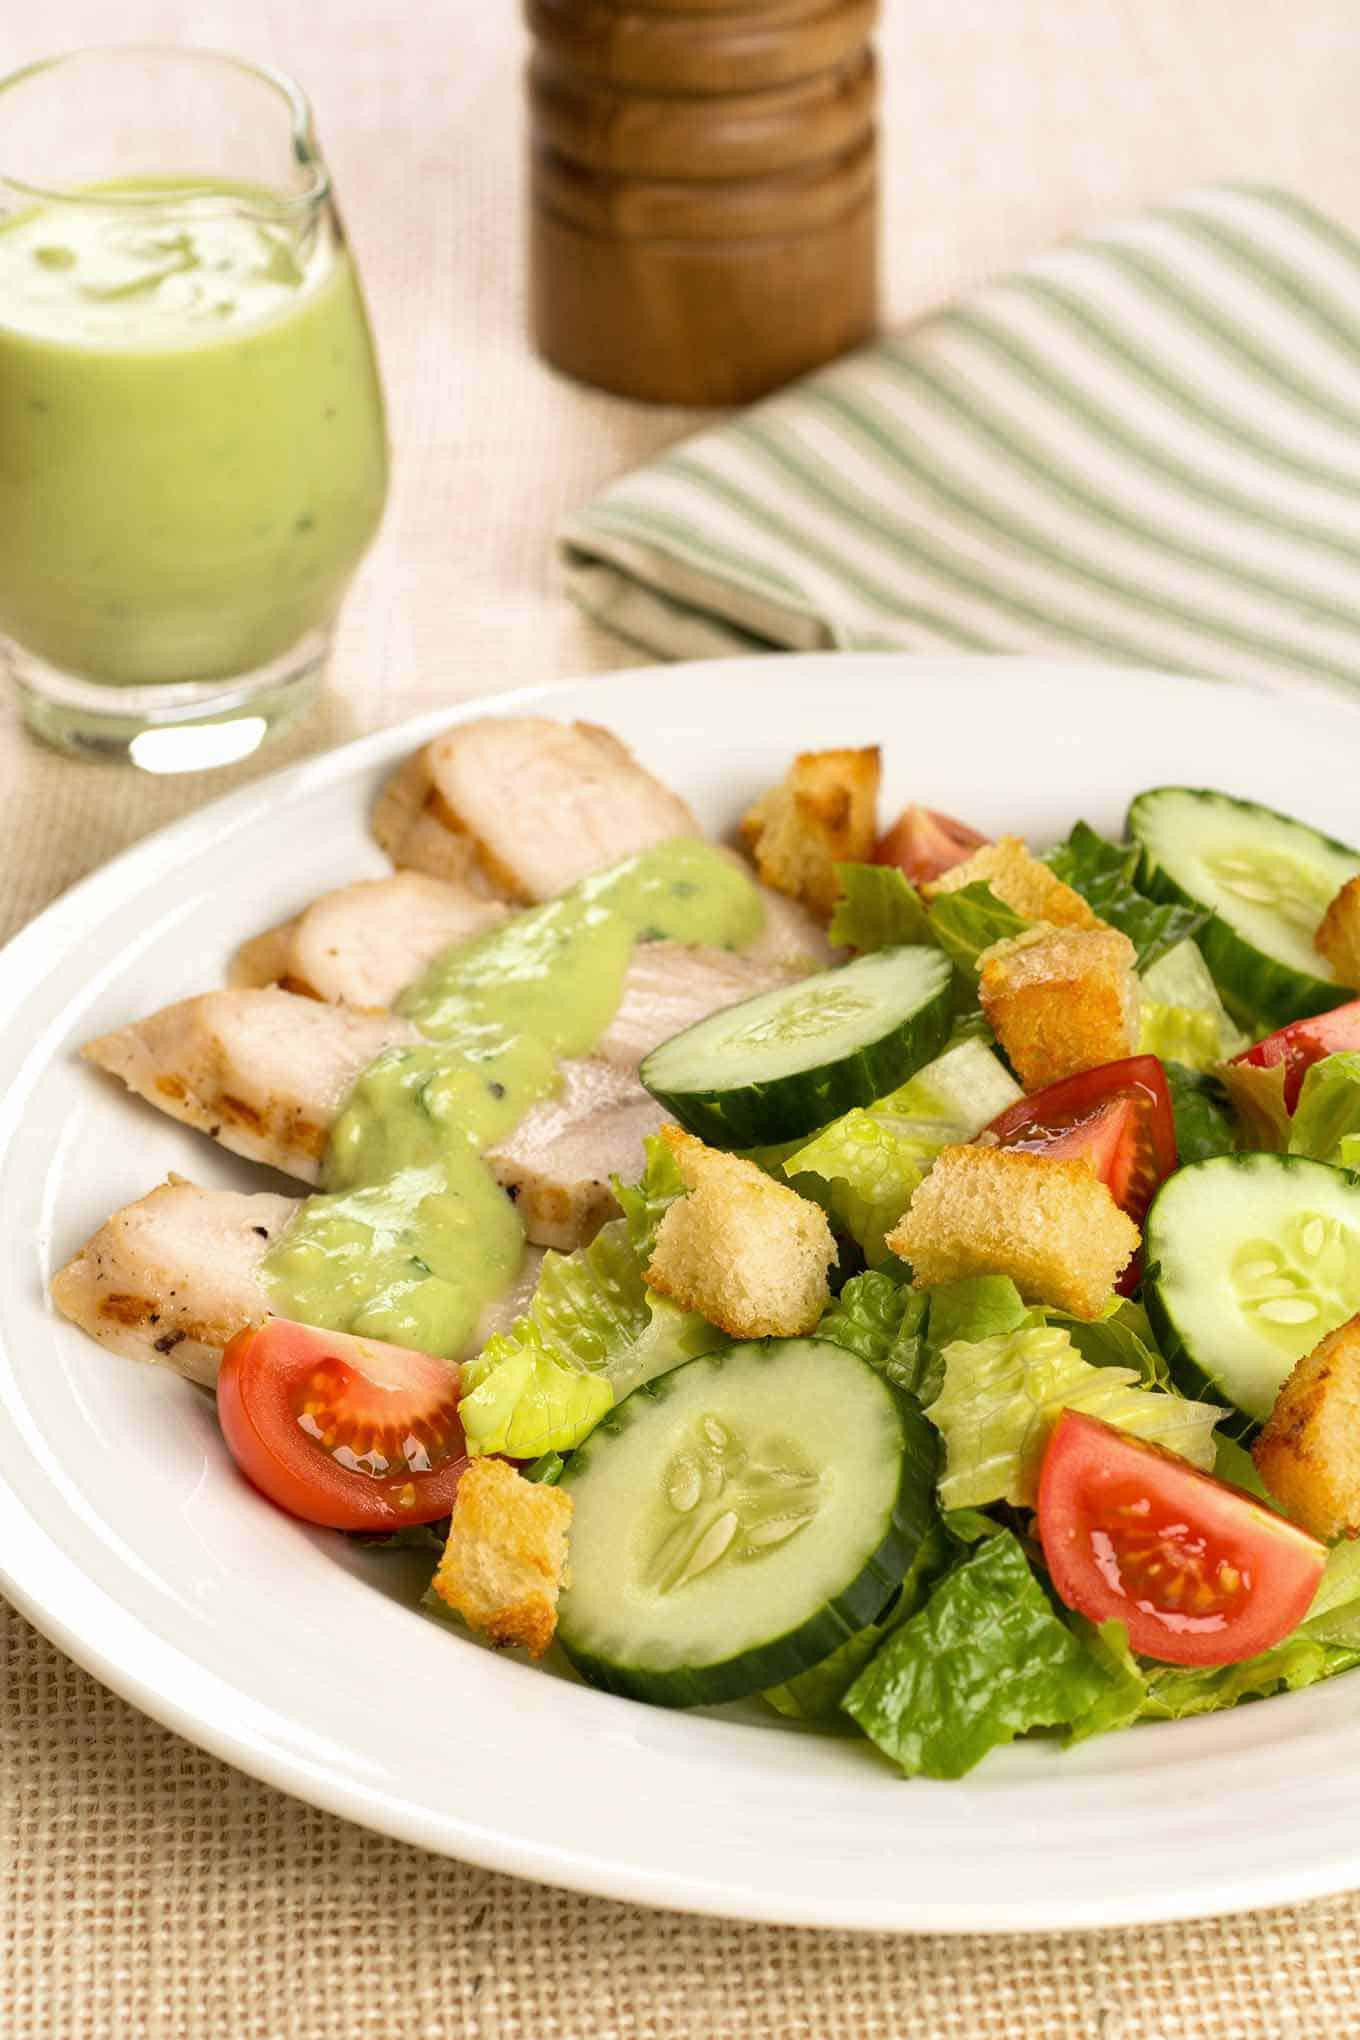 Low Fat Salad Dressing Recipes
 Grilled Turkey Salad with Low Fat Avocado Dressing Recipe